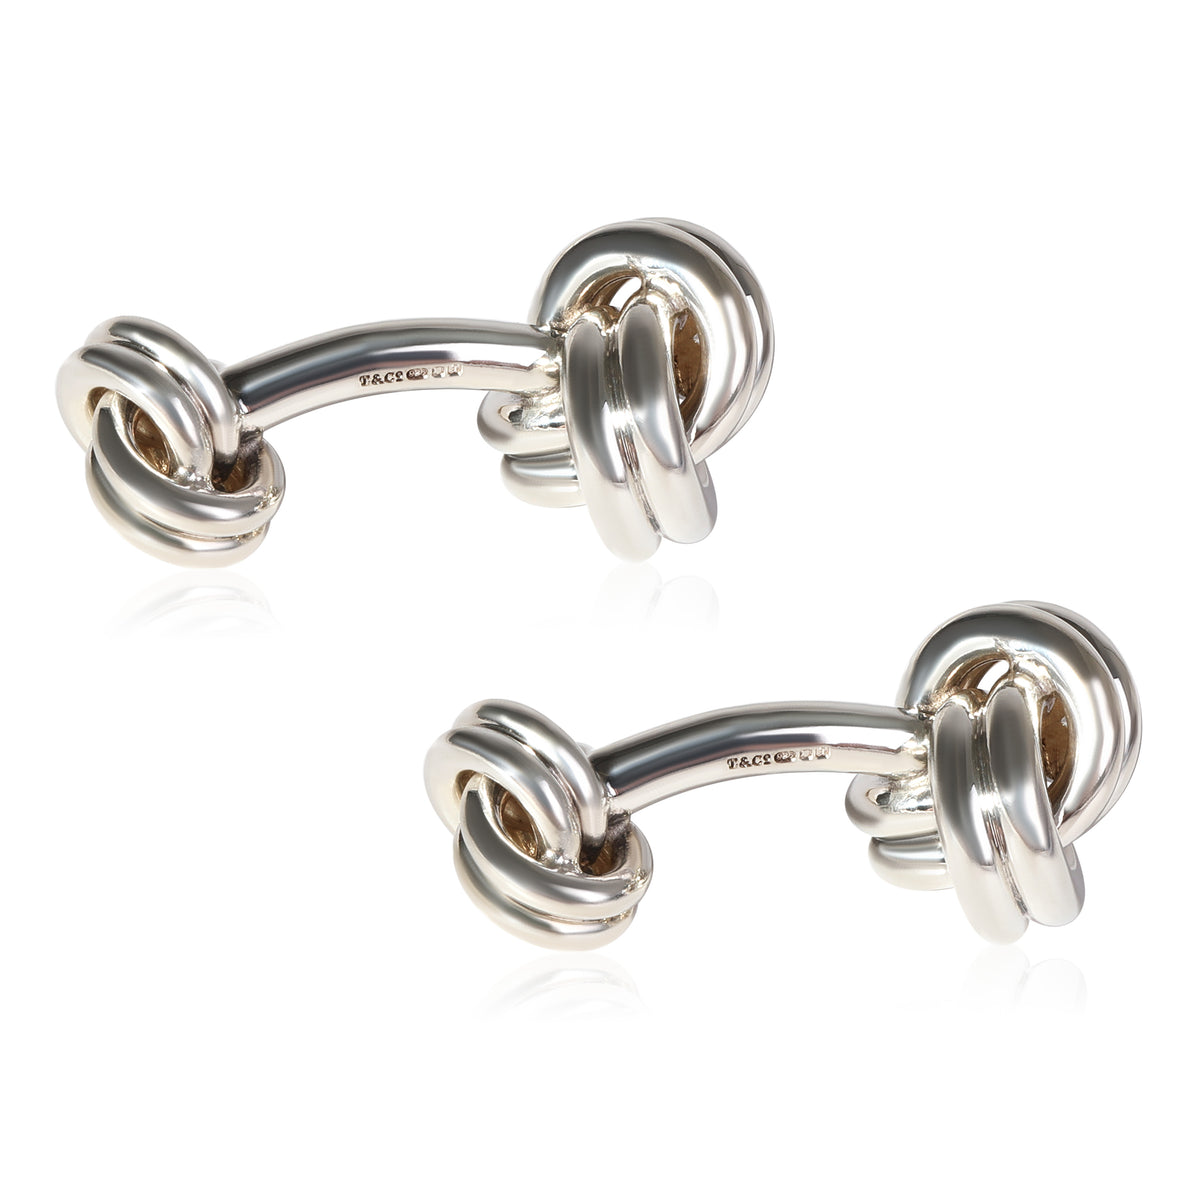 Tiffany & Co. Love Knot Cufflinks in Sterling Silver